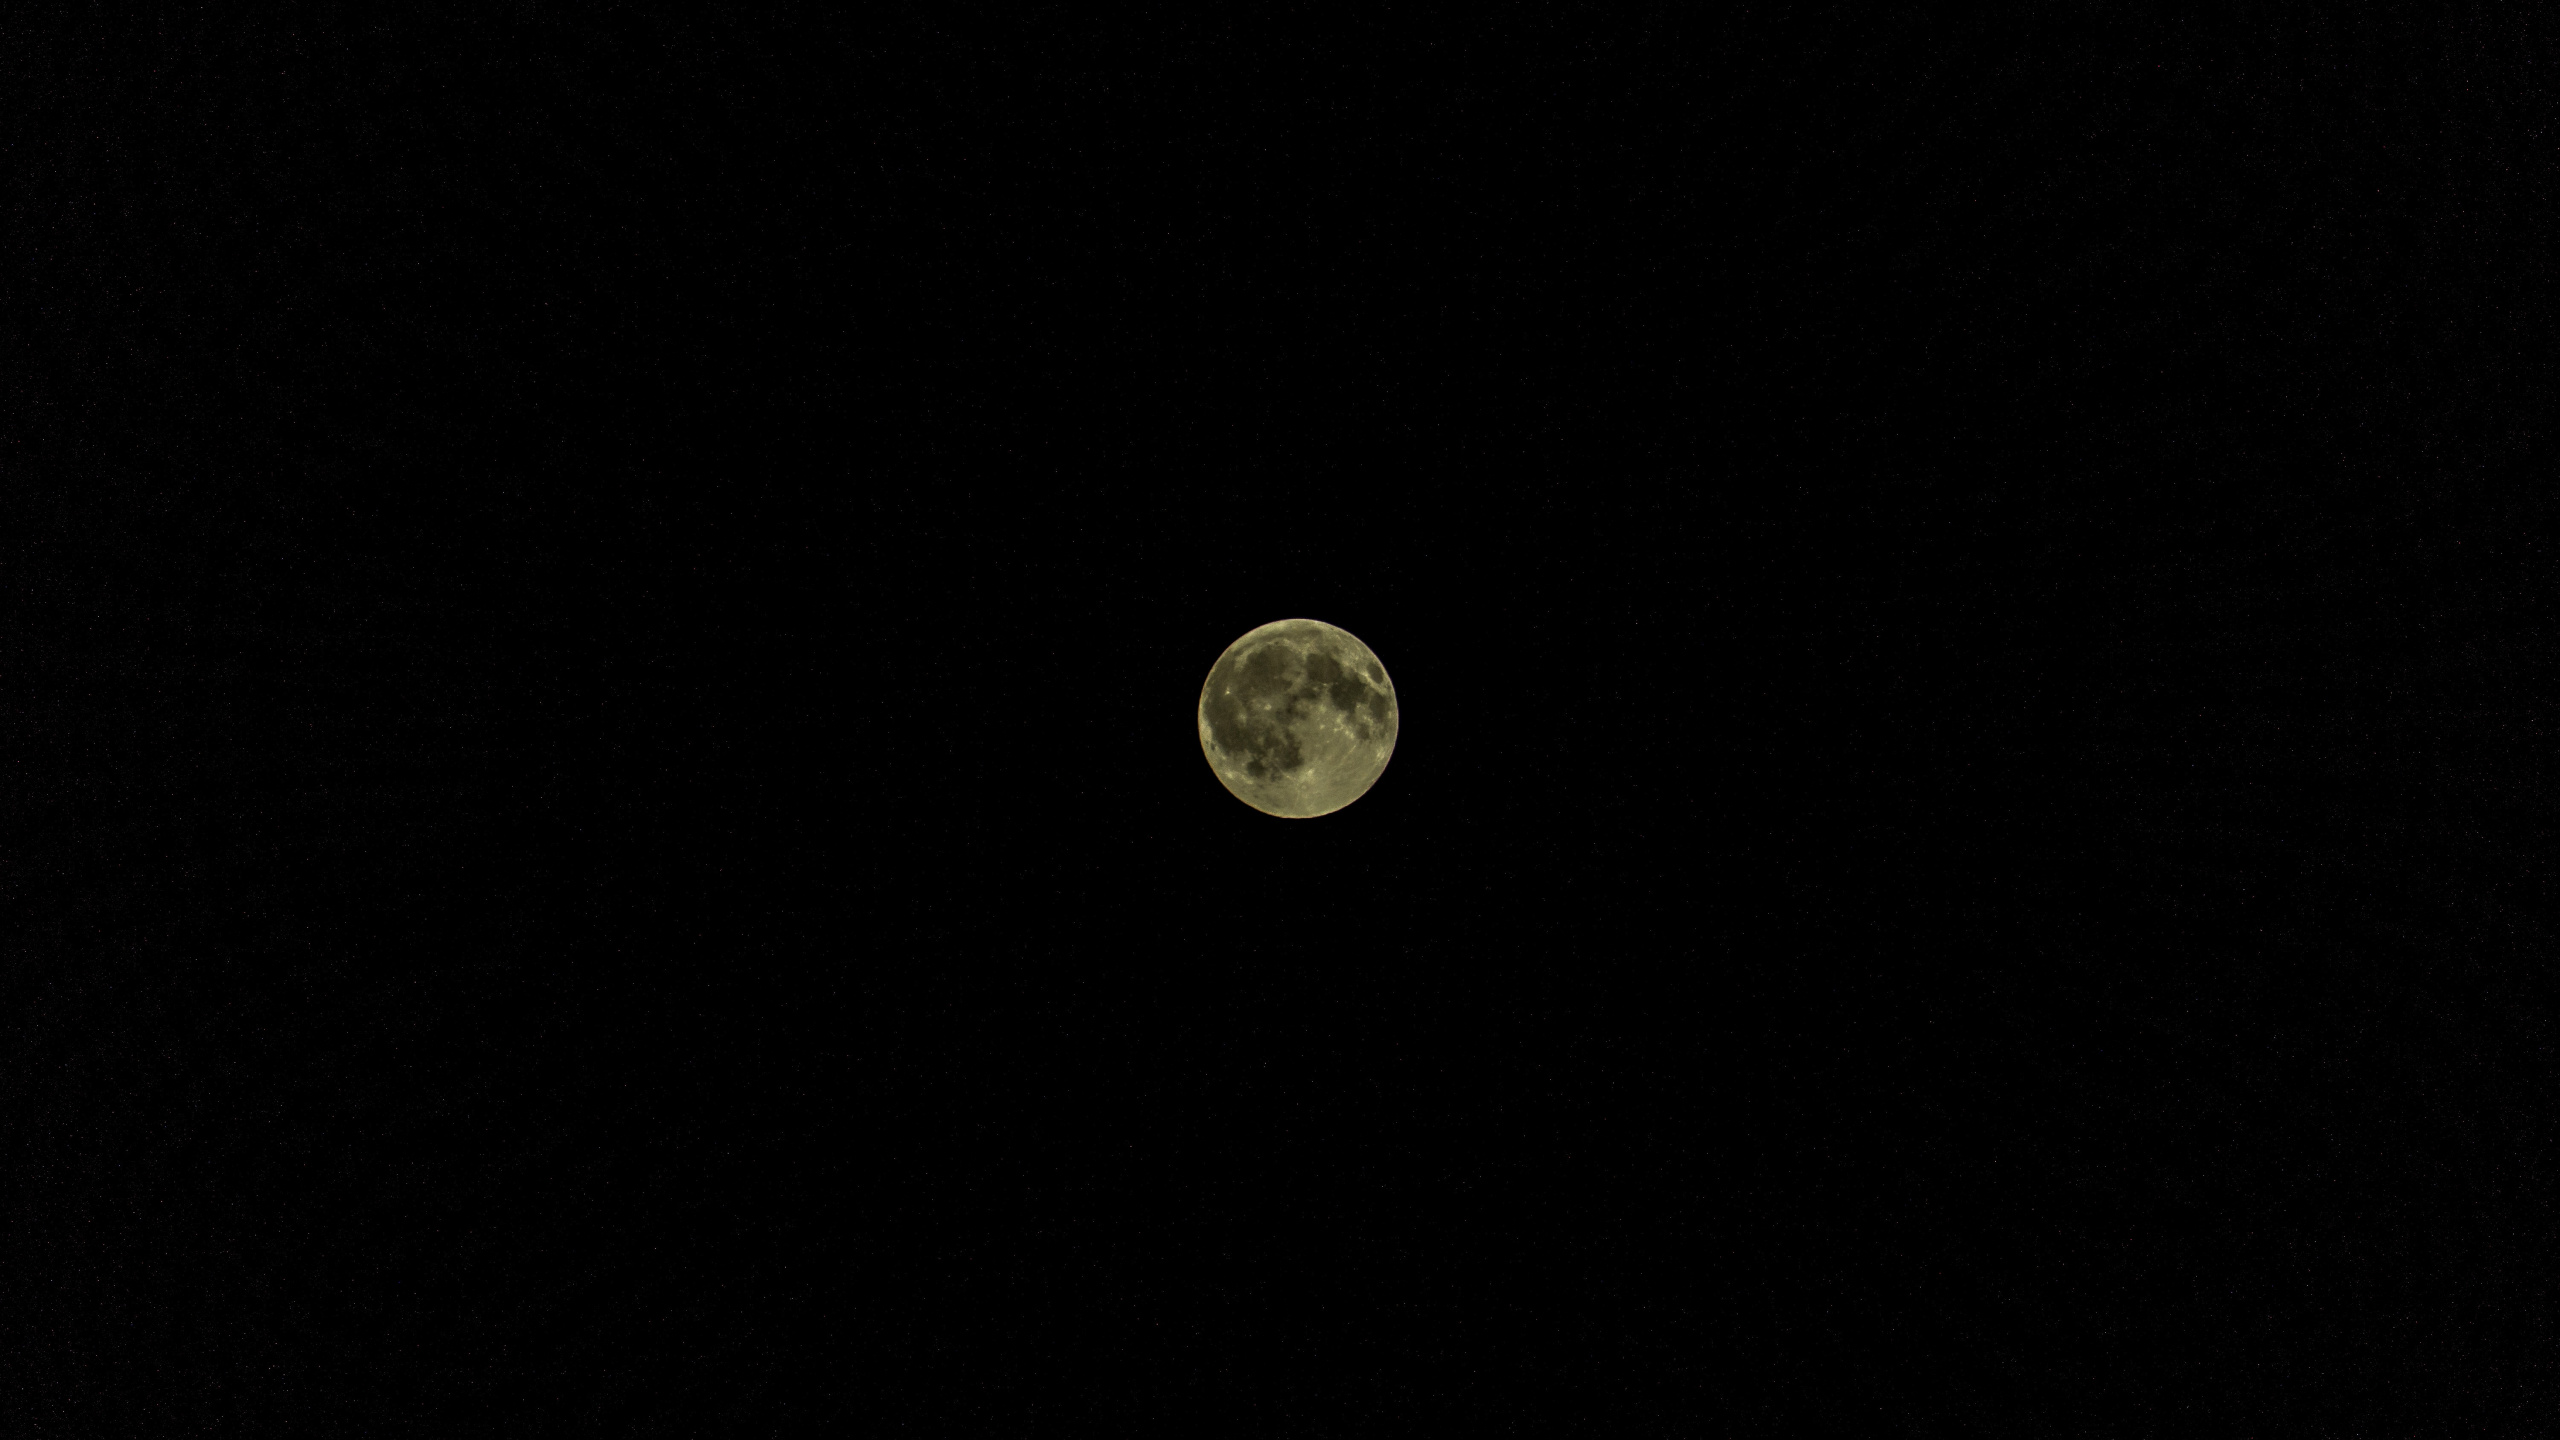 Full Moon in The Night Sky. Wallpaper in 2560x1440 Resolution